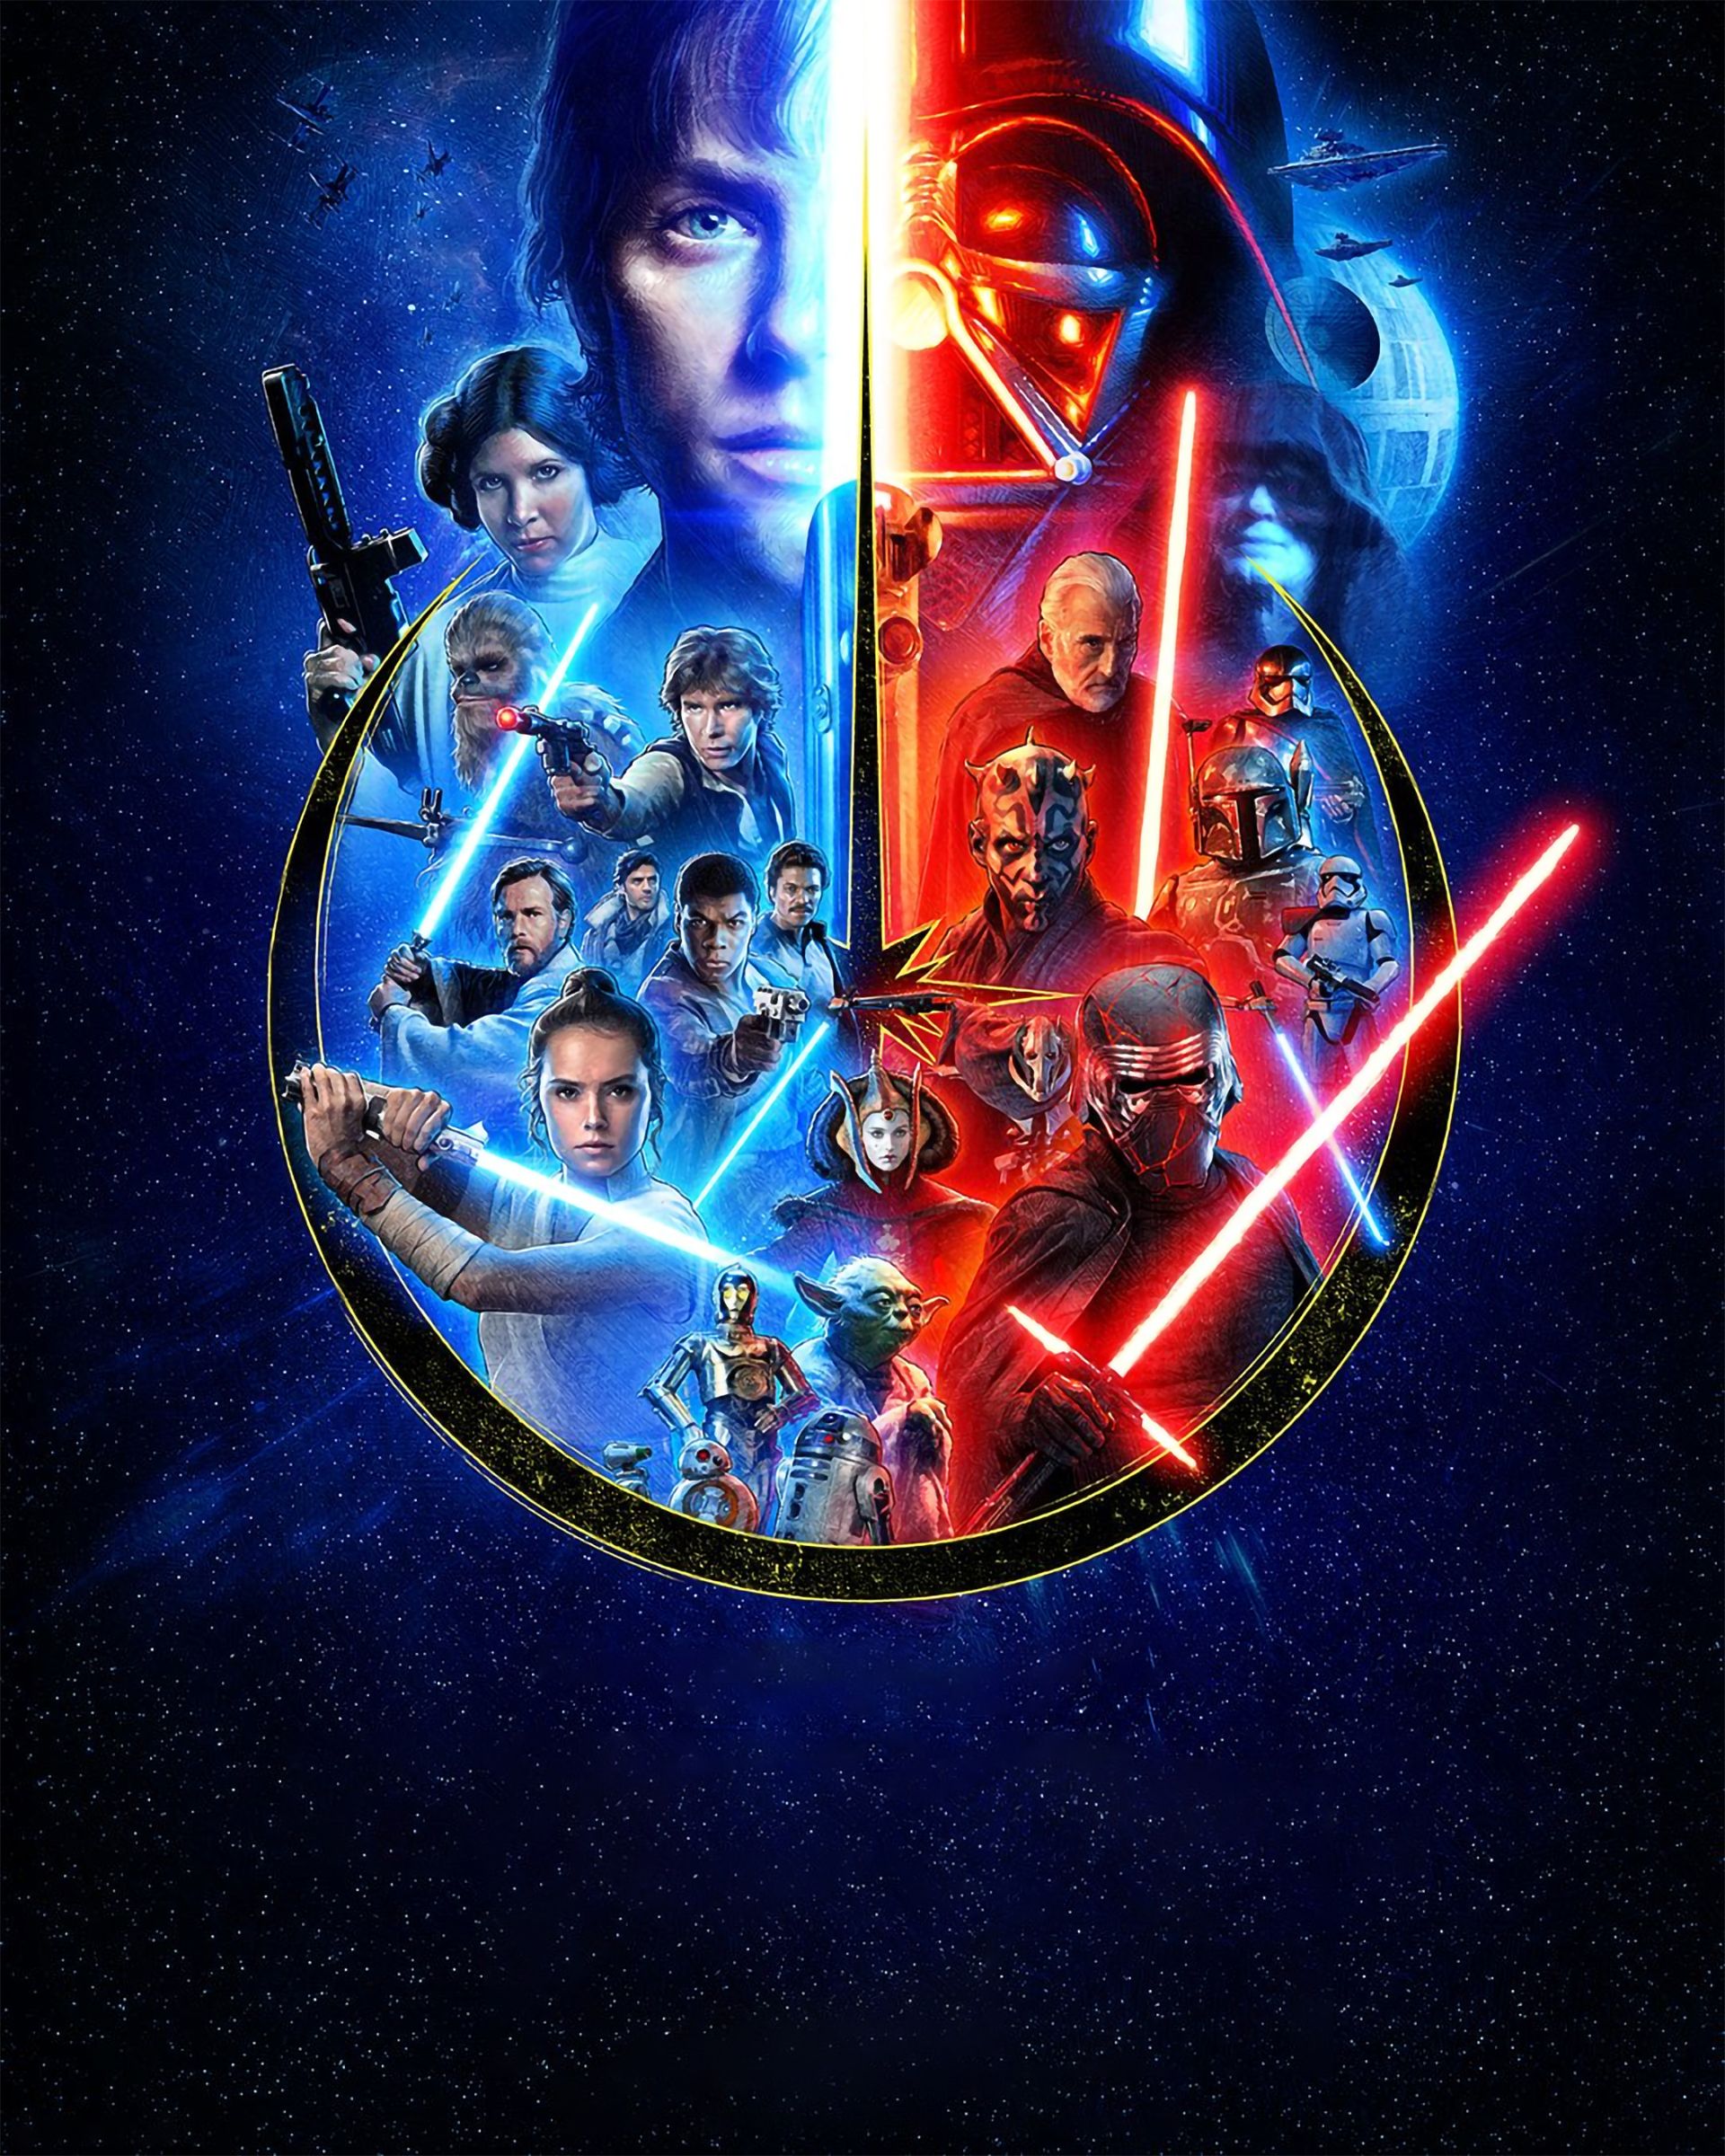 Star Wars Skywalker Saga Wallpaper, HD Movies 4K Wallpaper